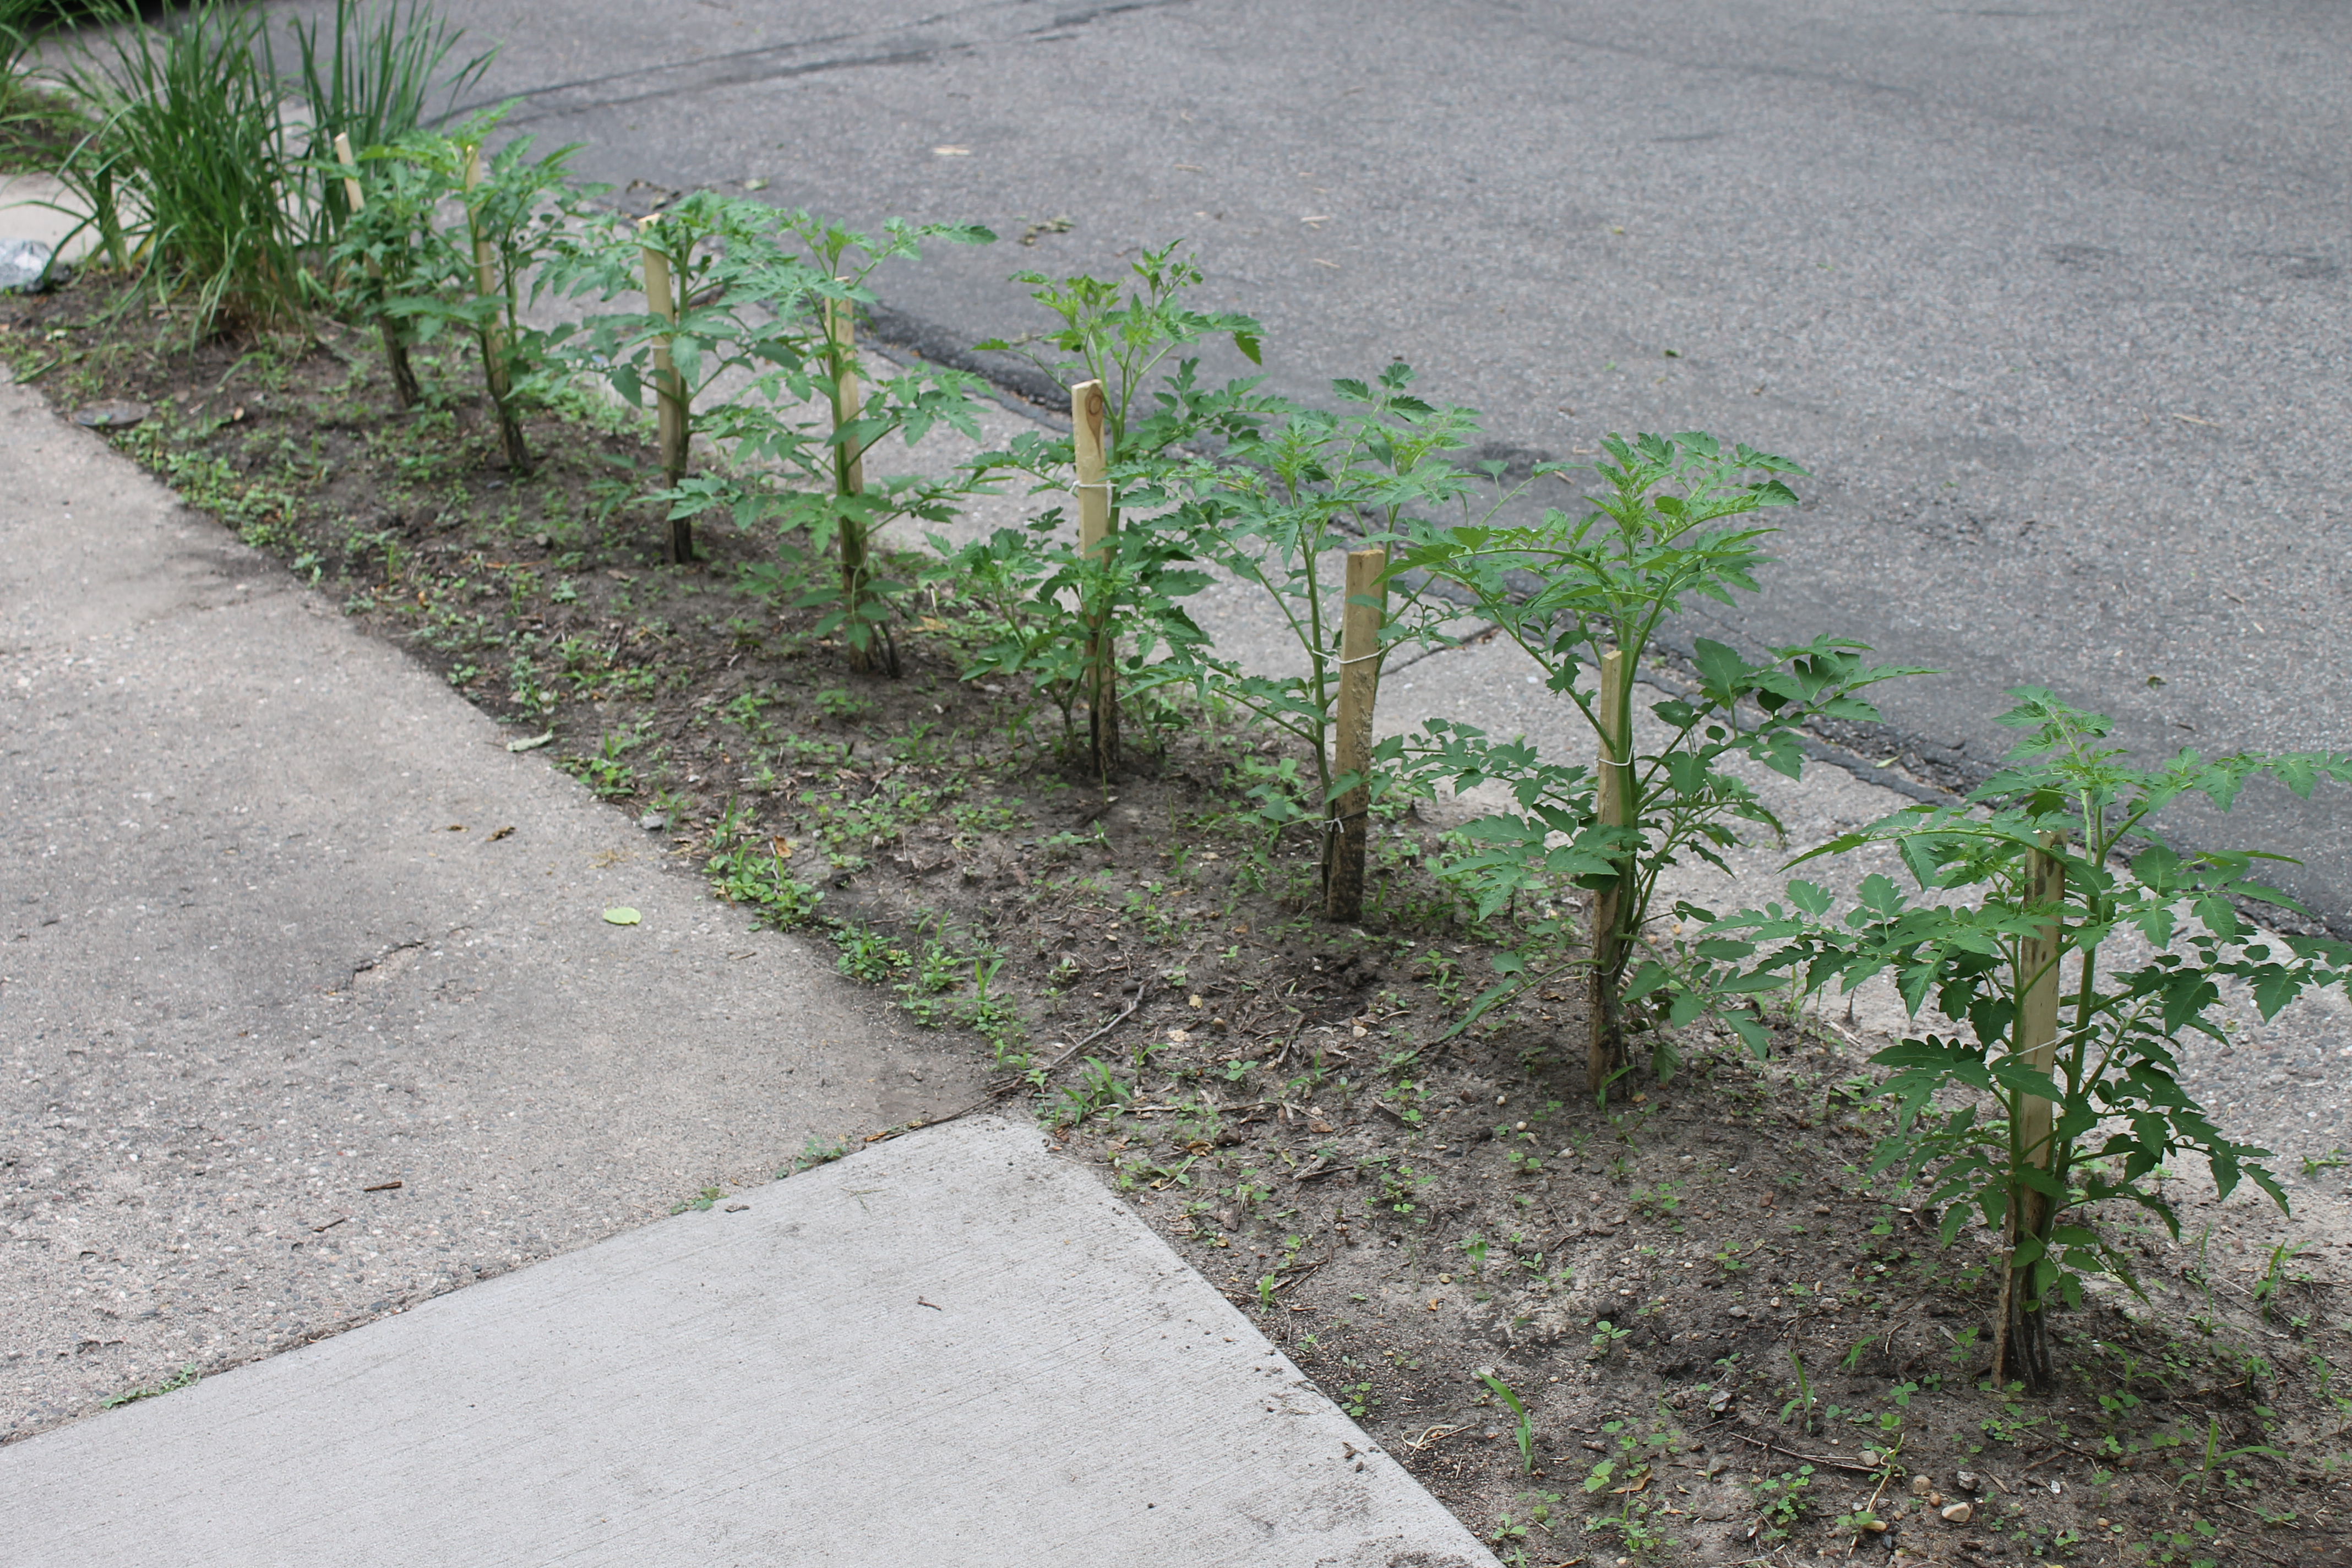 Tomato plants growing on the boulevard urban garden.